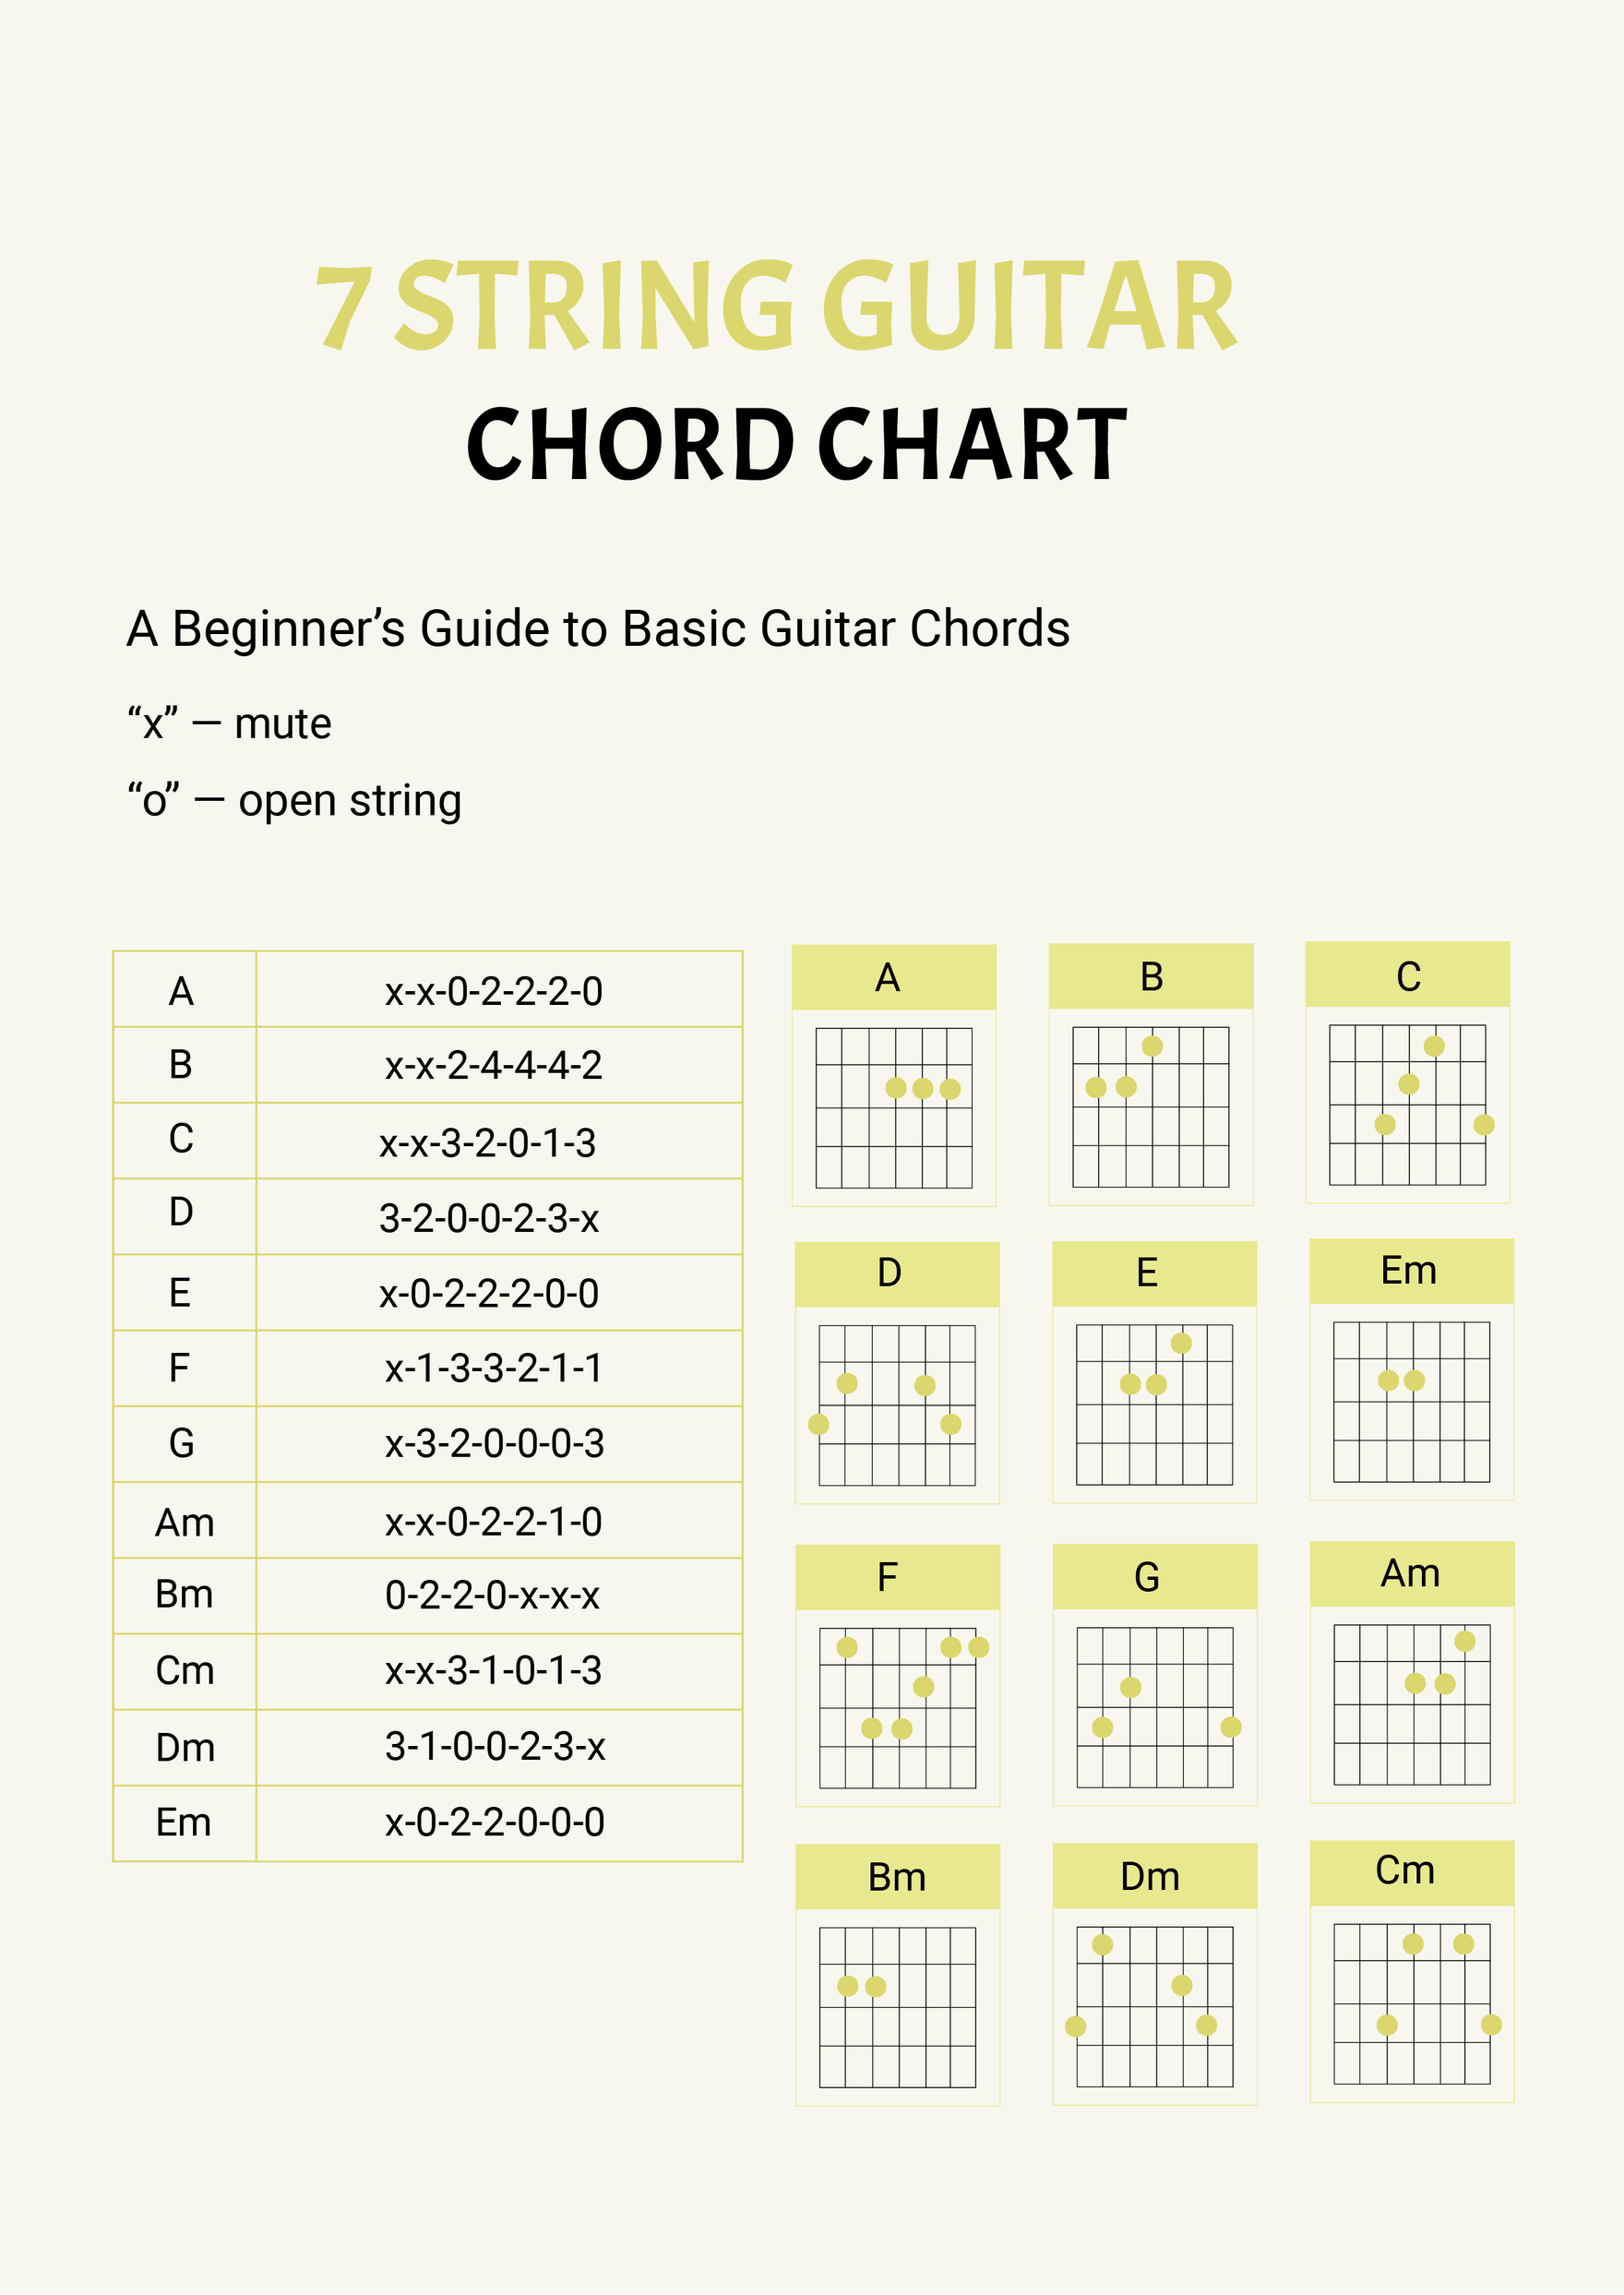 7 String Guitar Chord Chart